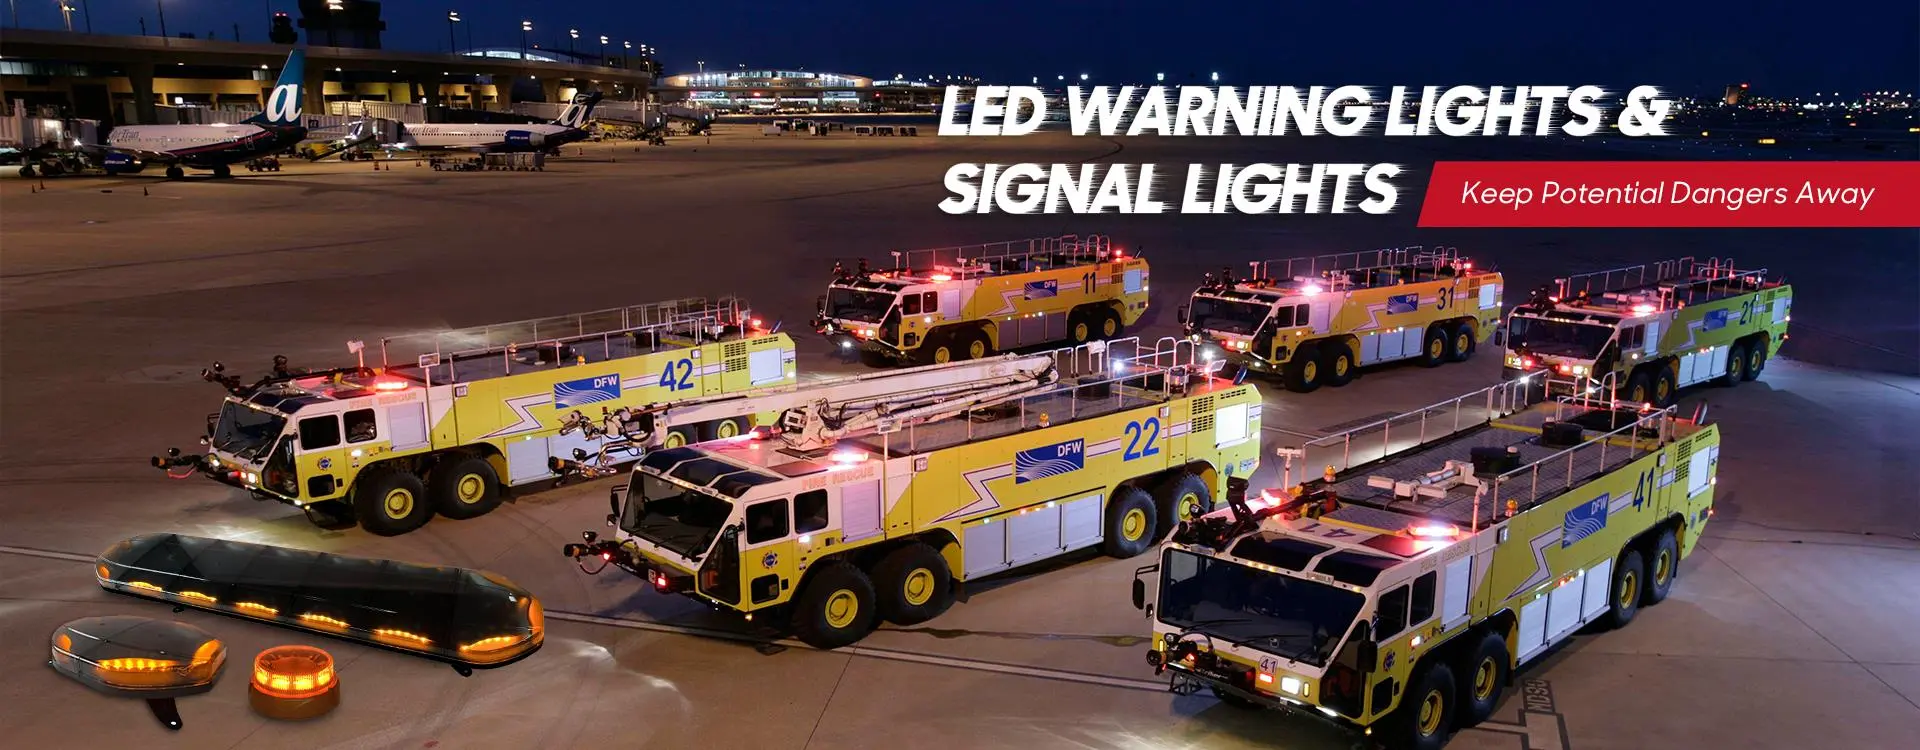 LED Warning Lights & Signal Lights